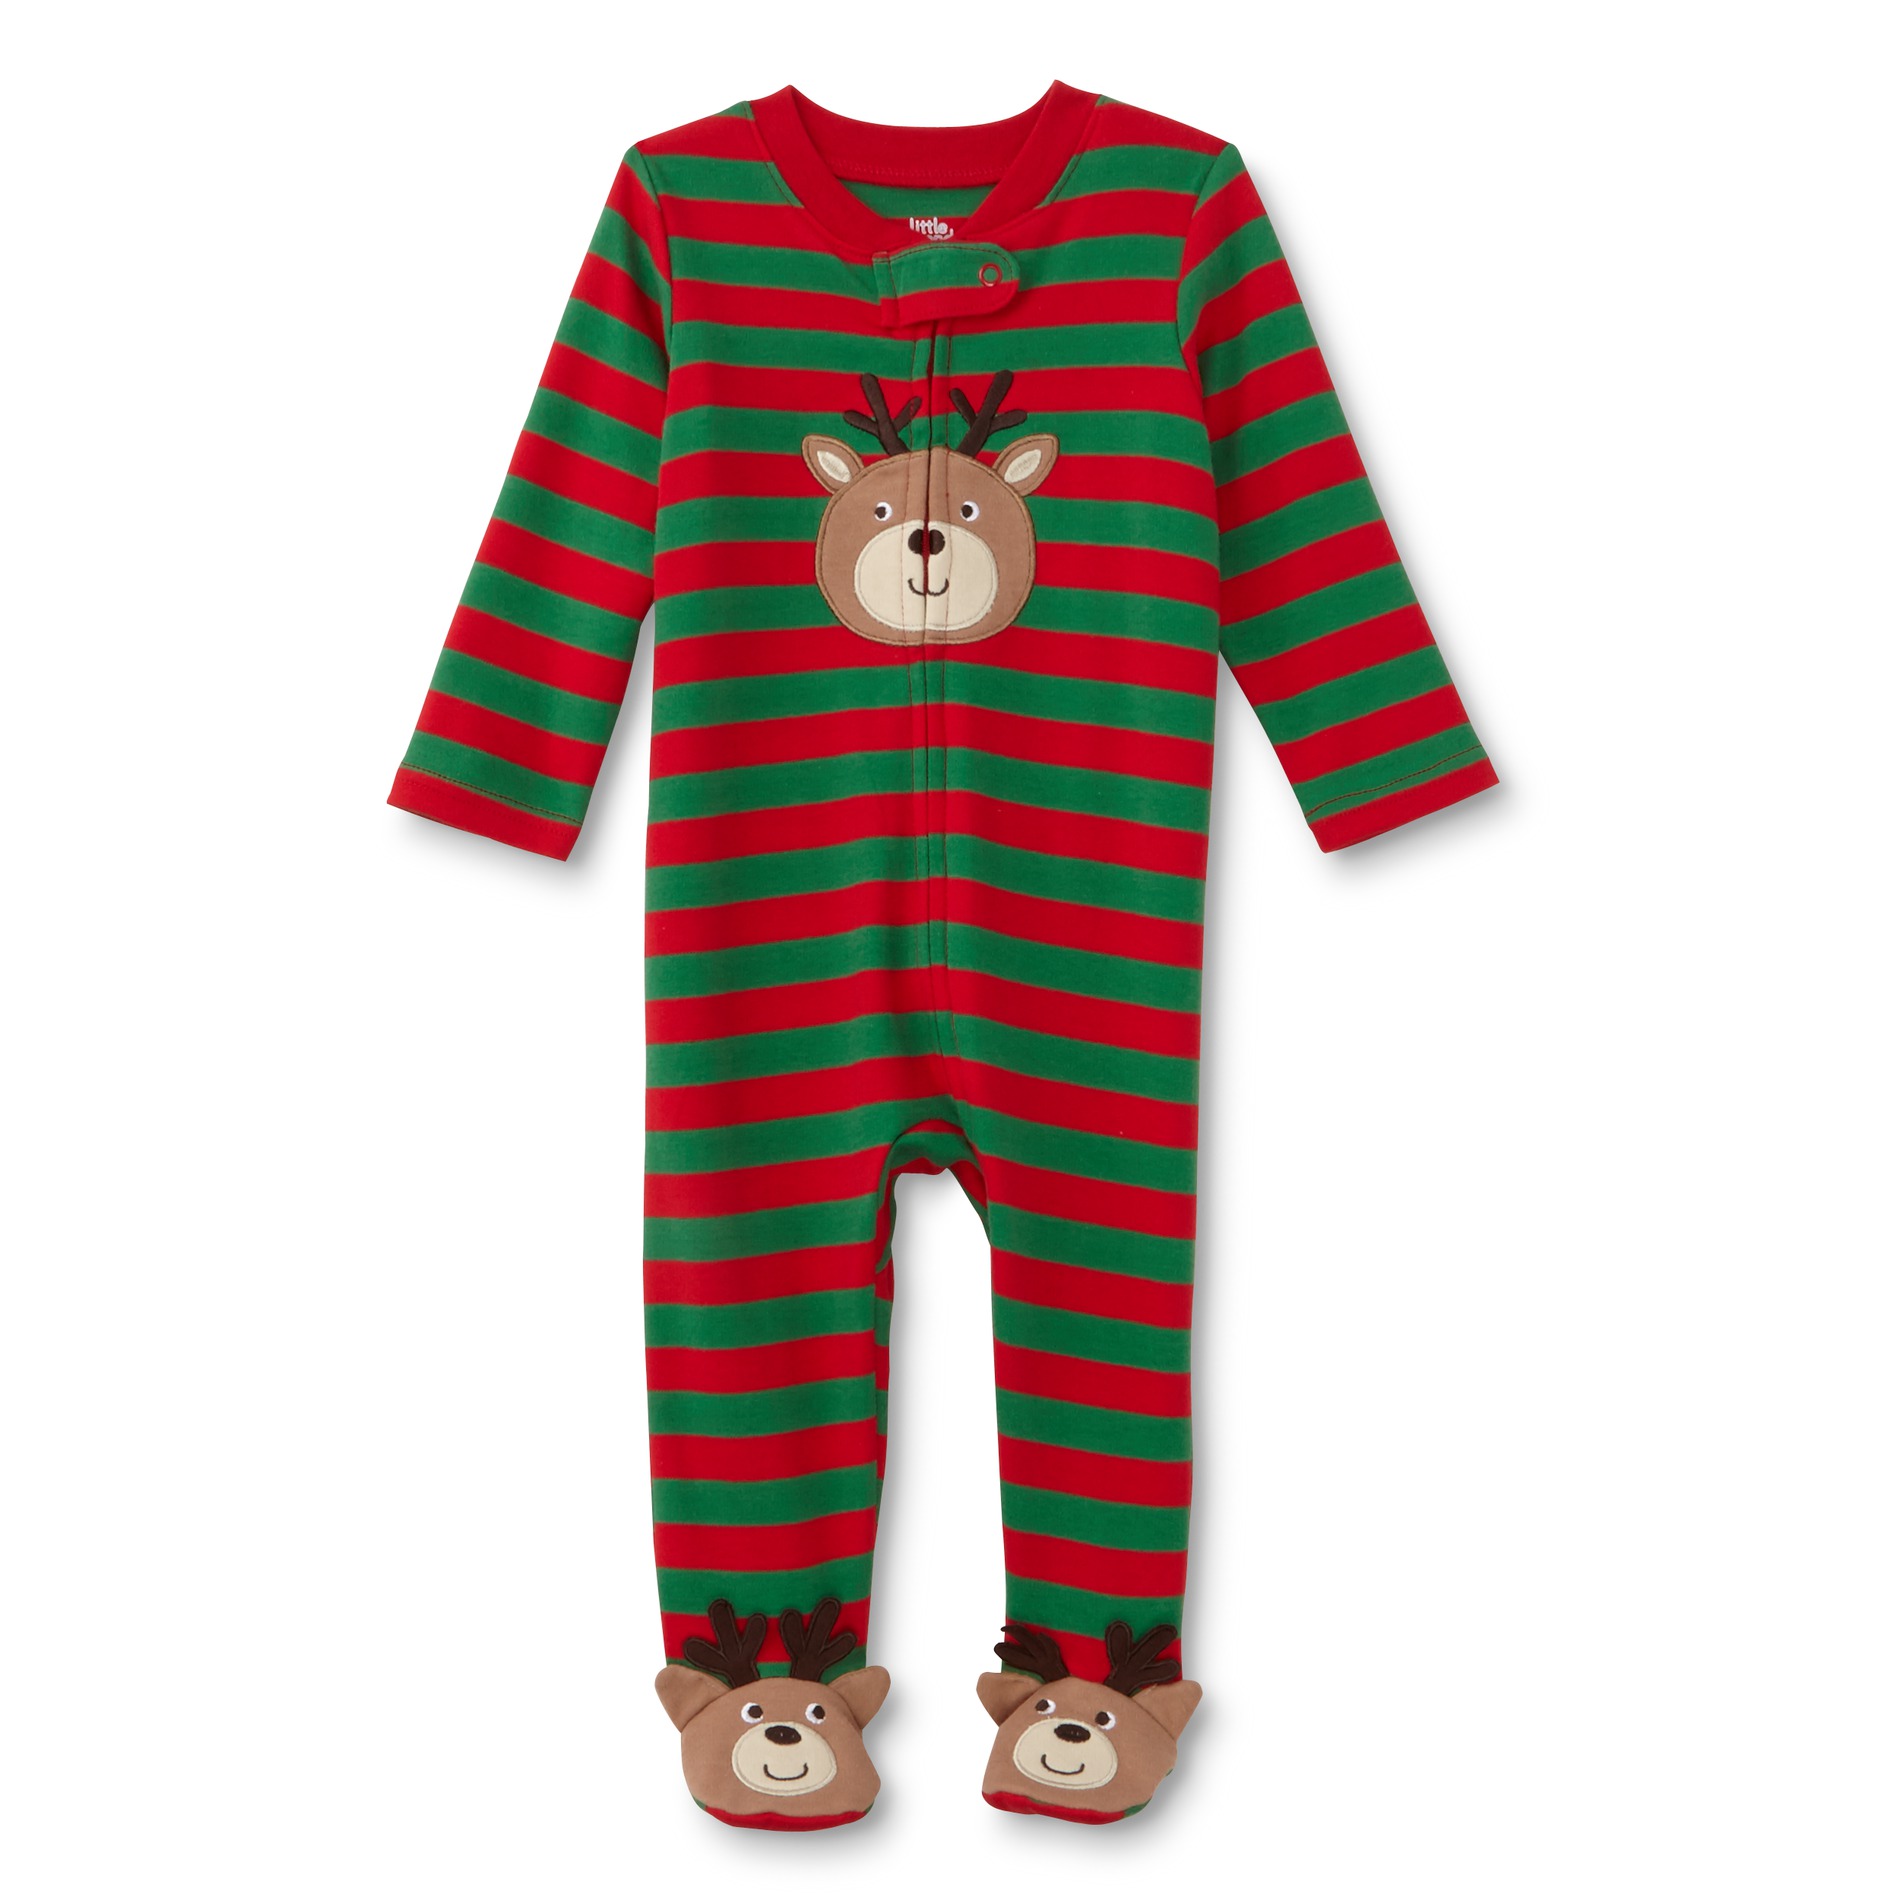 Little Wonders Newborn Boys' Christmas Sleeper Pajamas - Reindeer